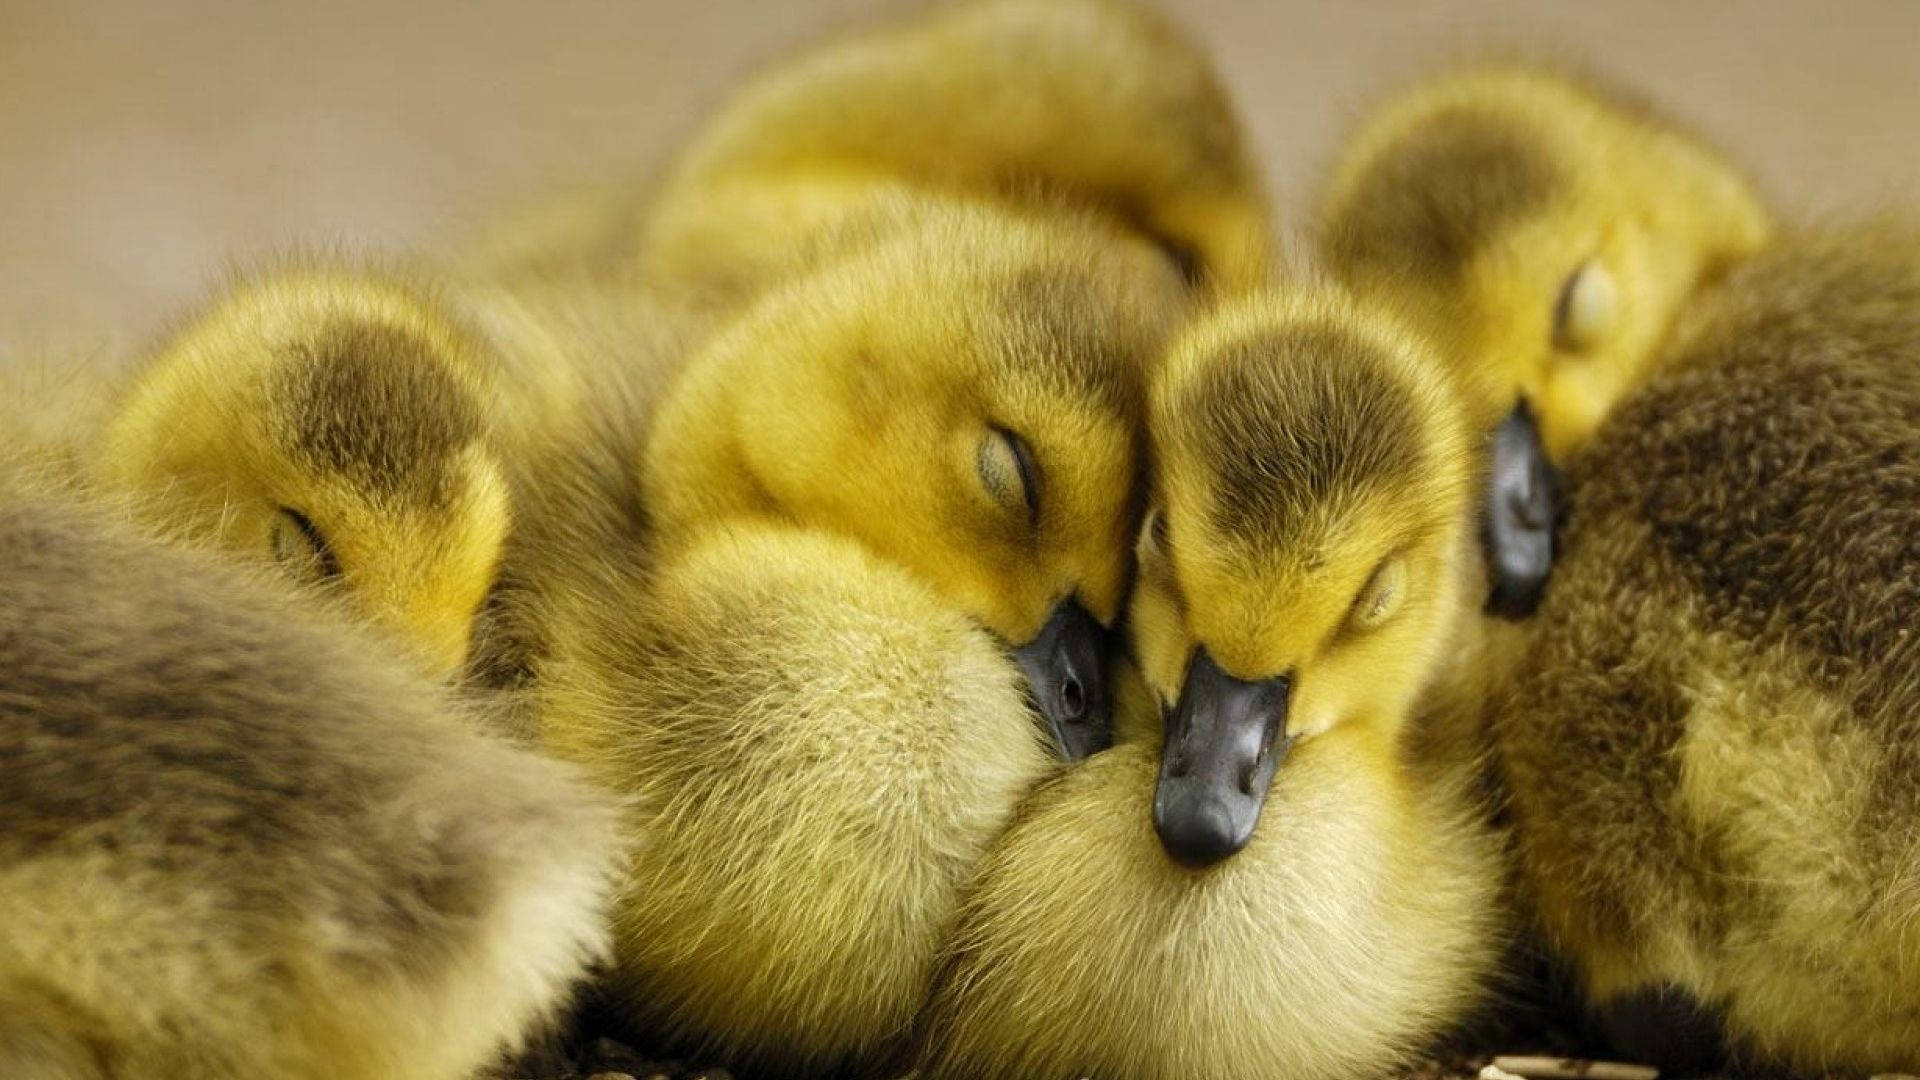 Sleeping Baby Ducks Wallpaper